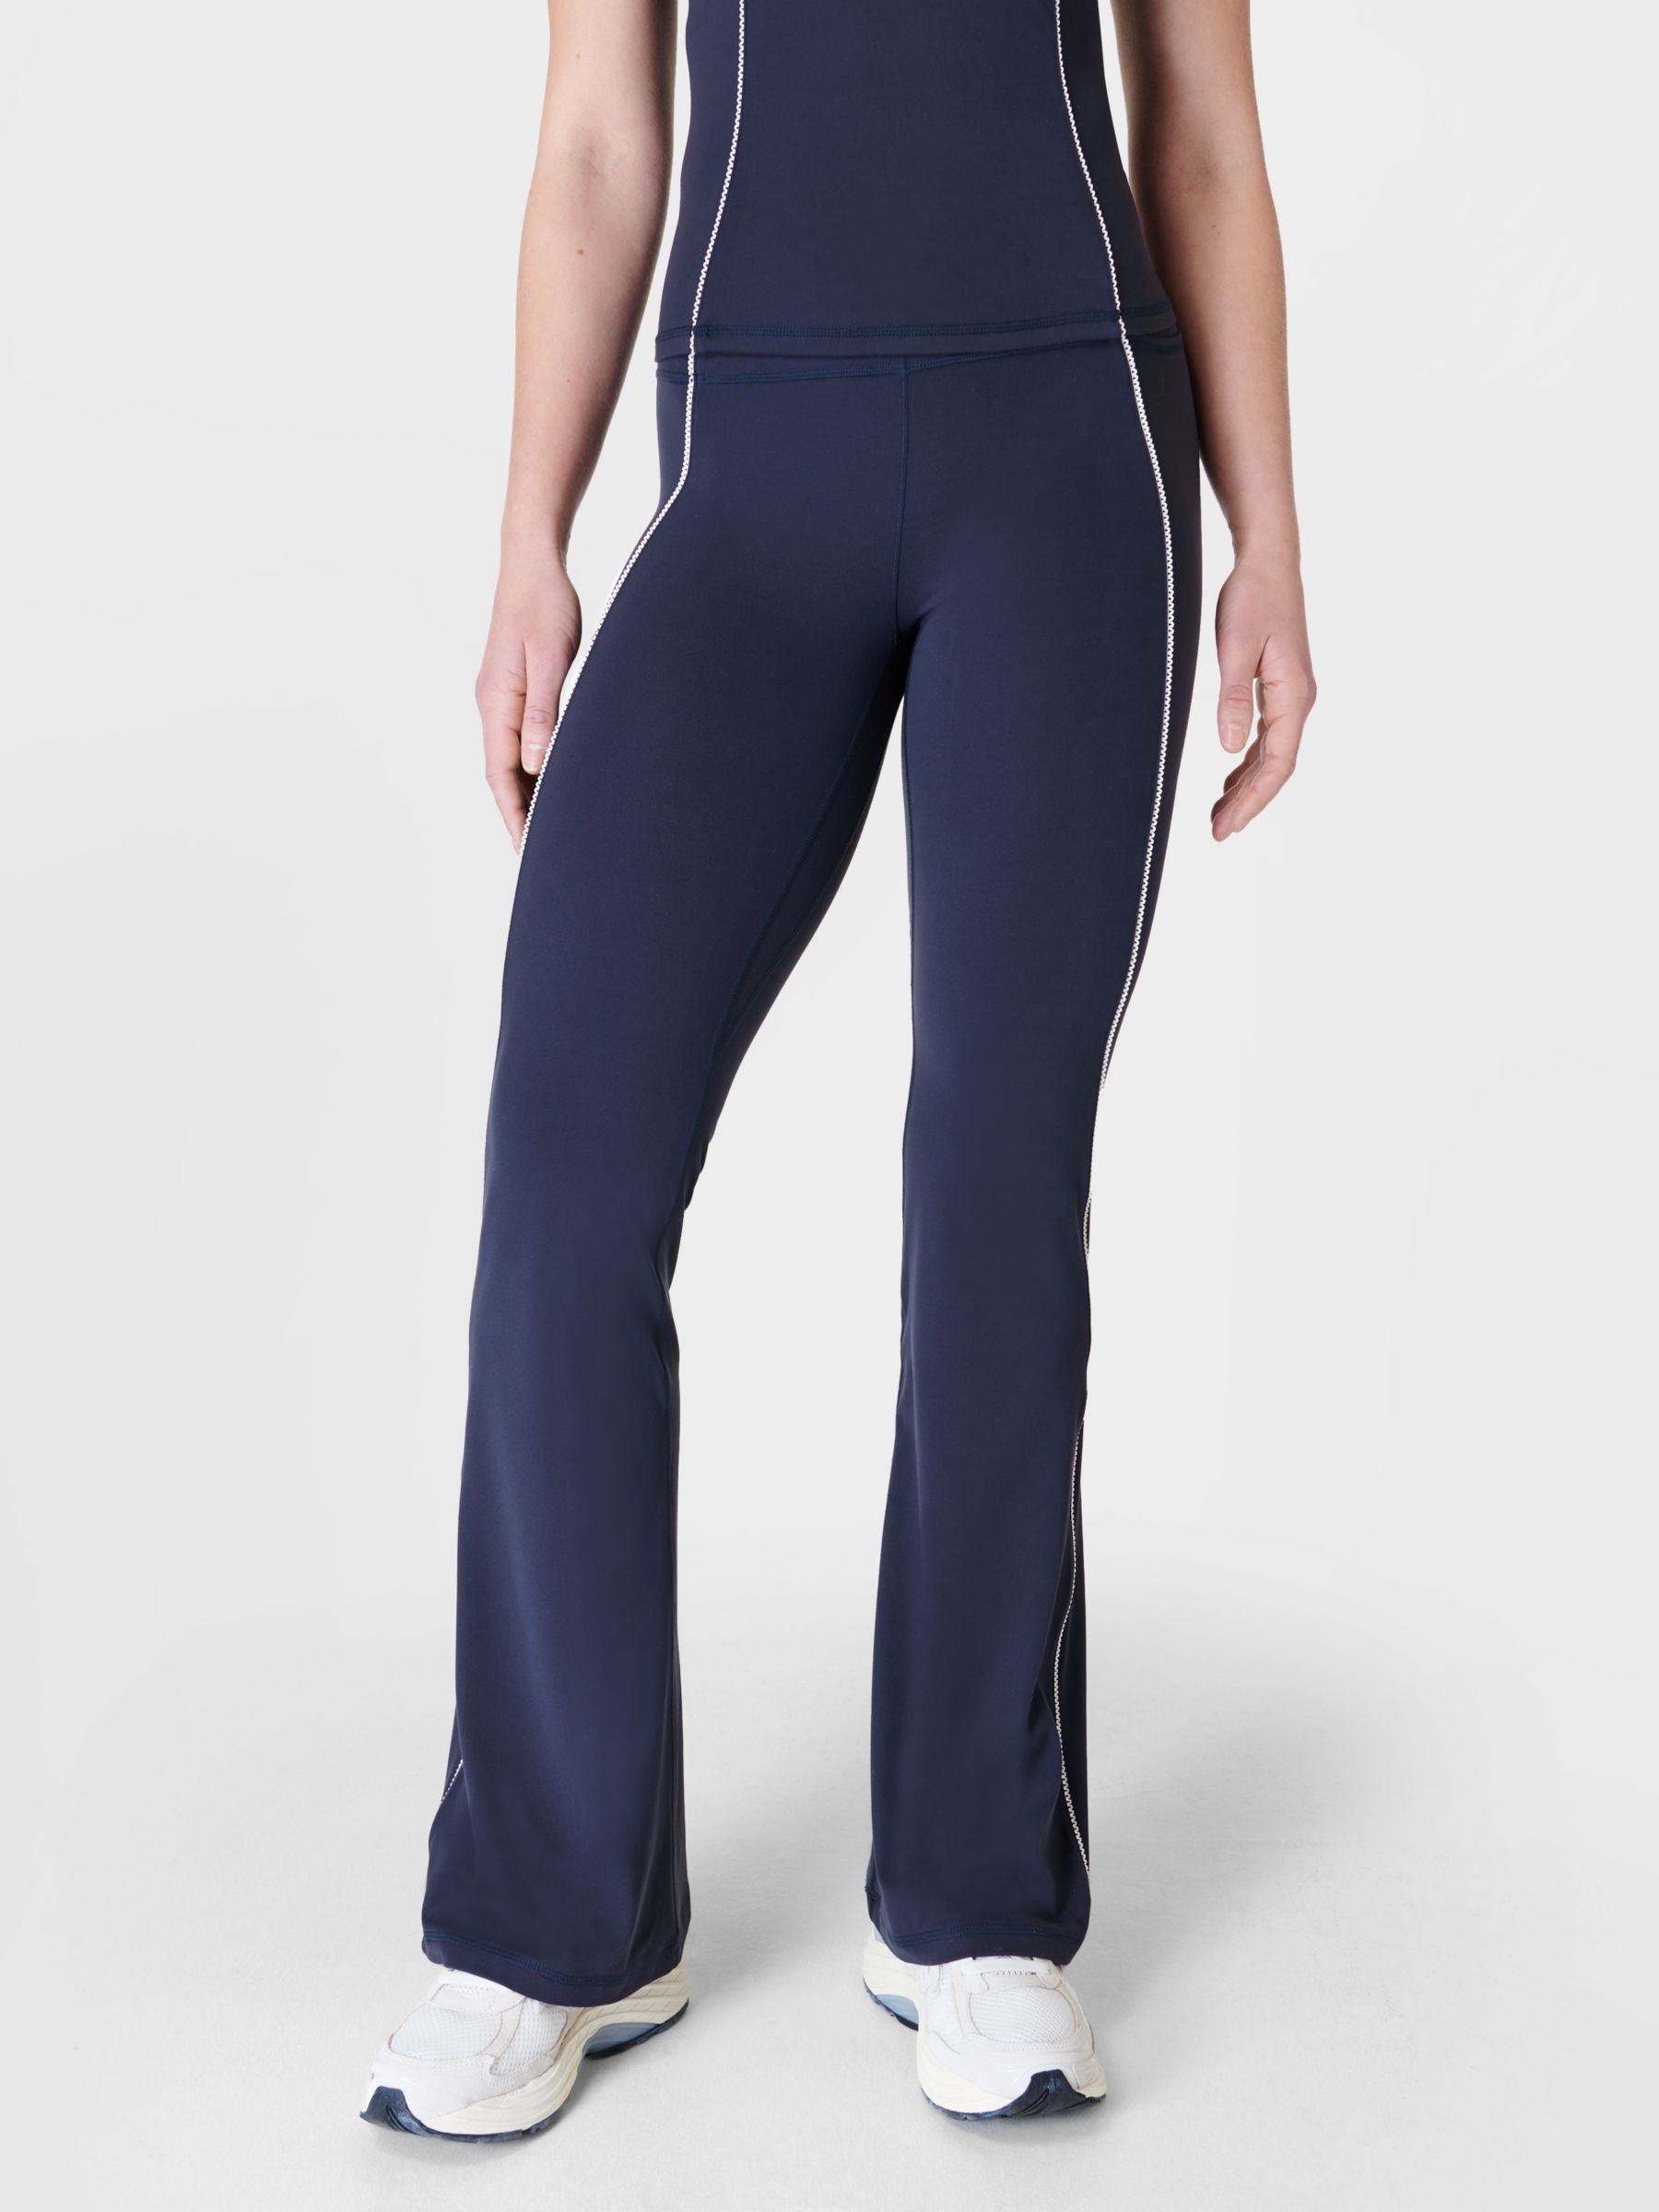 Sweaty Betty Picot Lace Flared Trousers, Navy Blue, XS